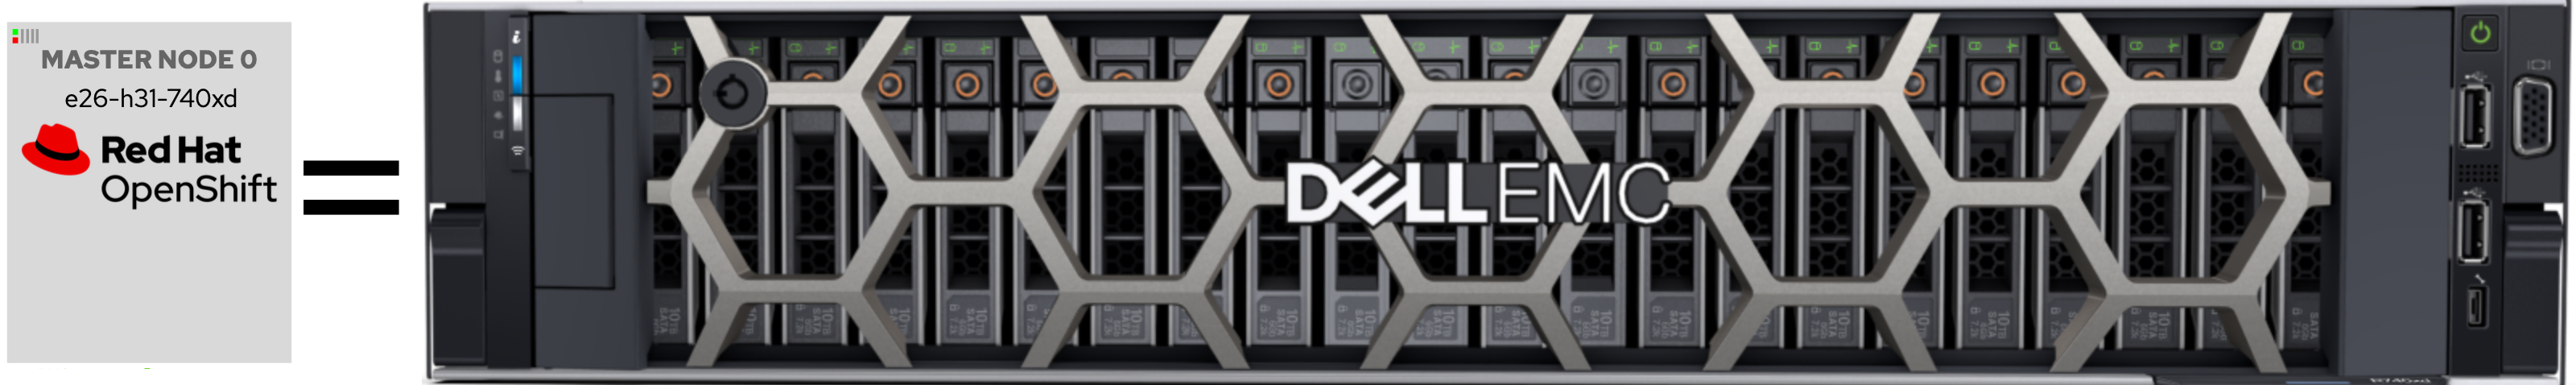 Dell PowerEdge R740xd servers